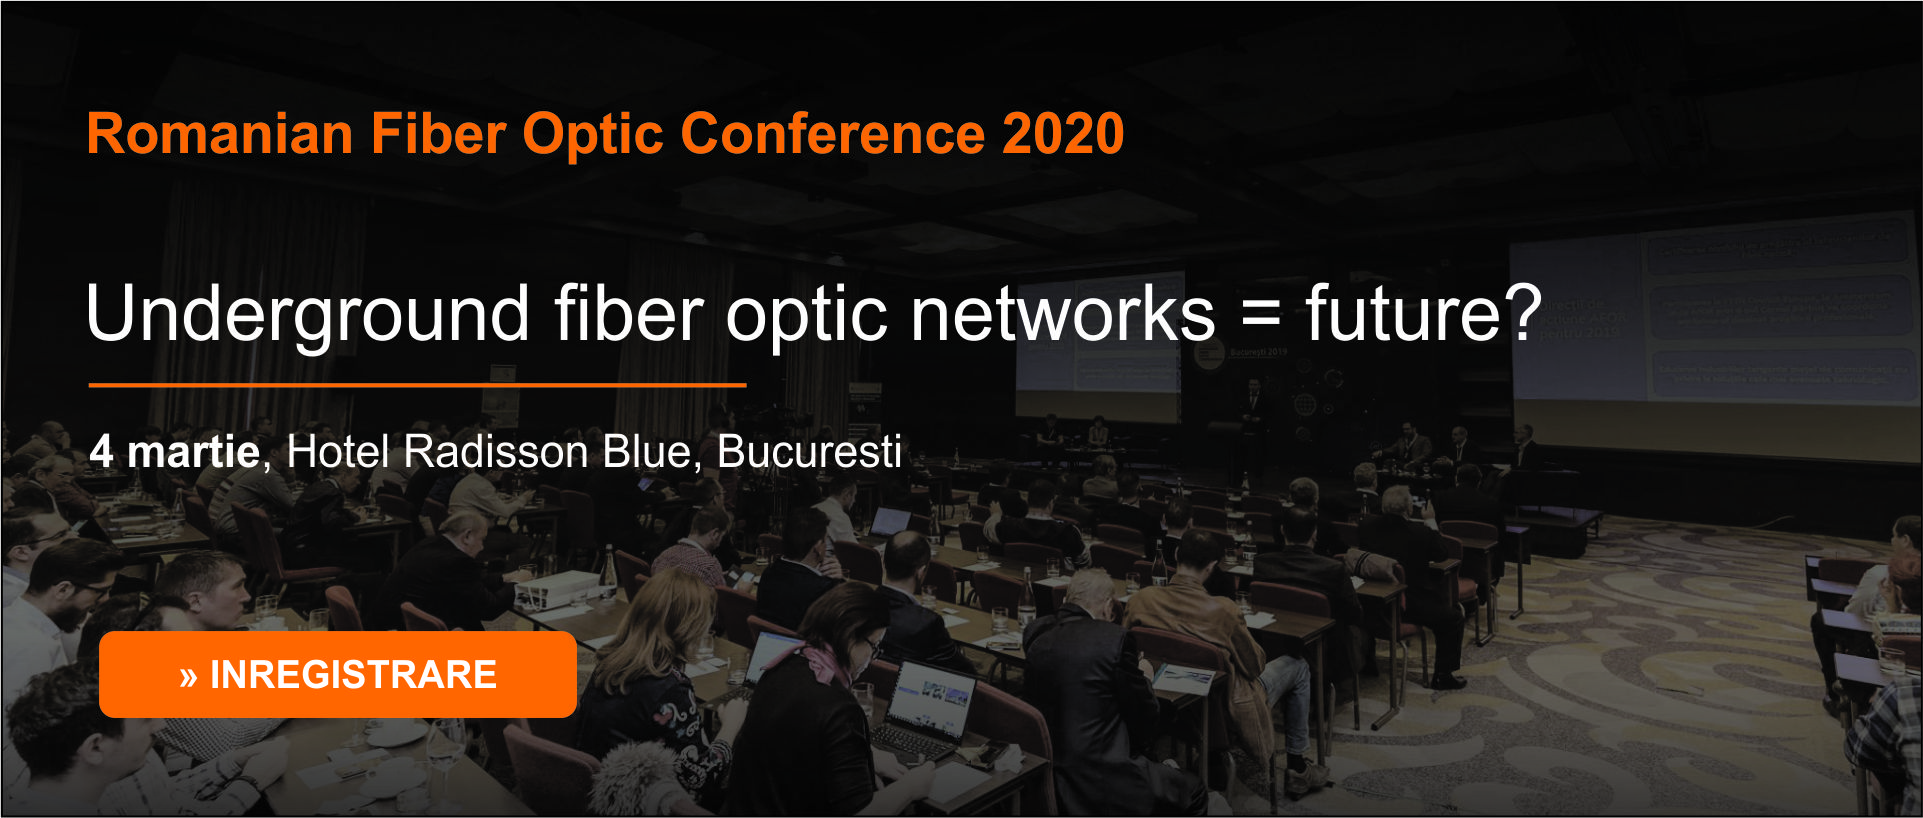 Romanian Fiber Optic Conference 2020